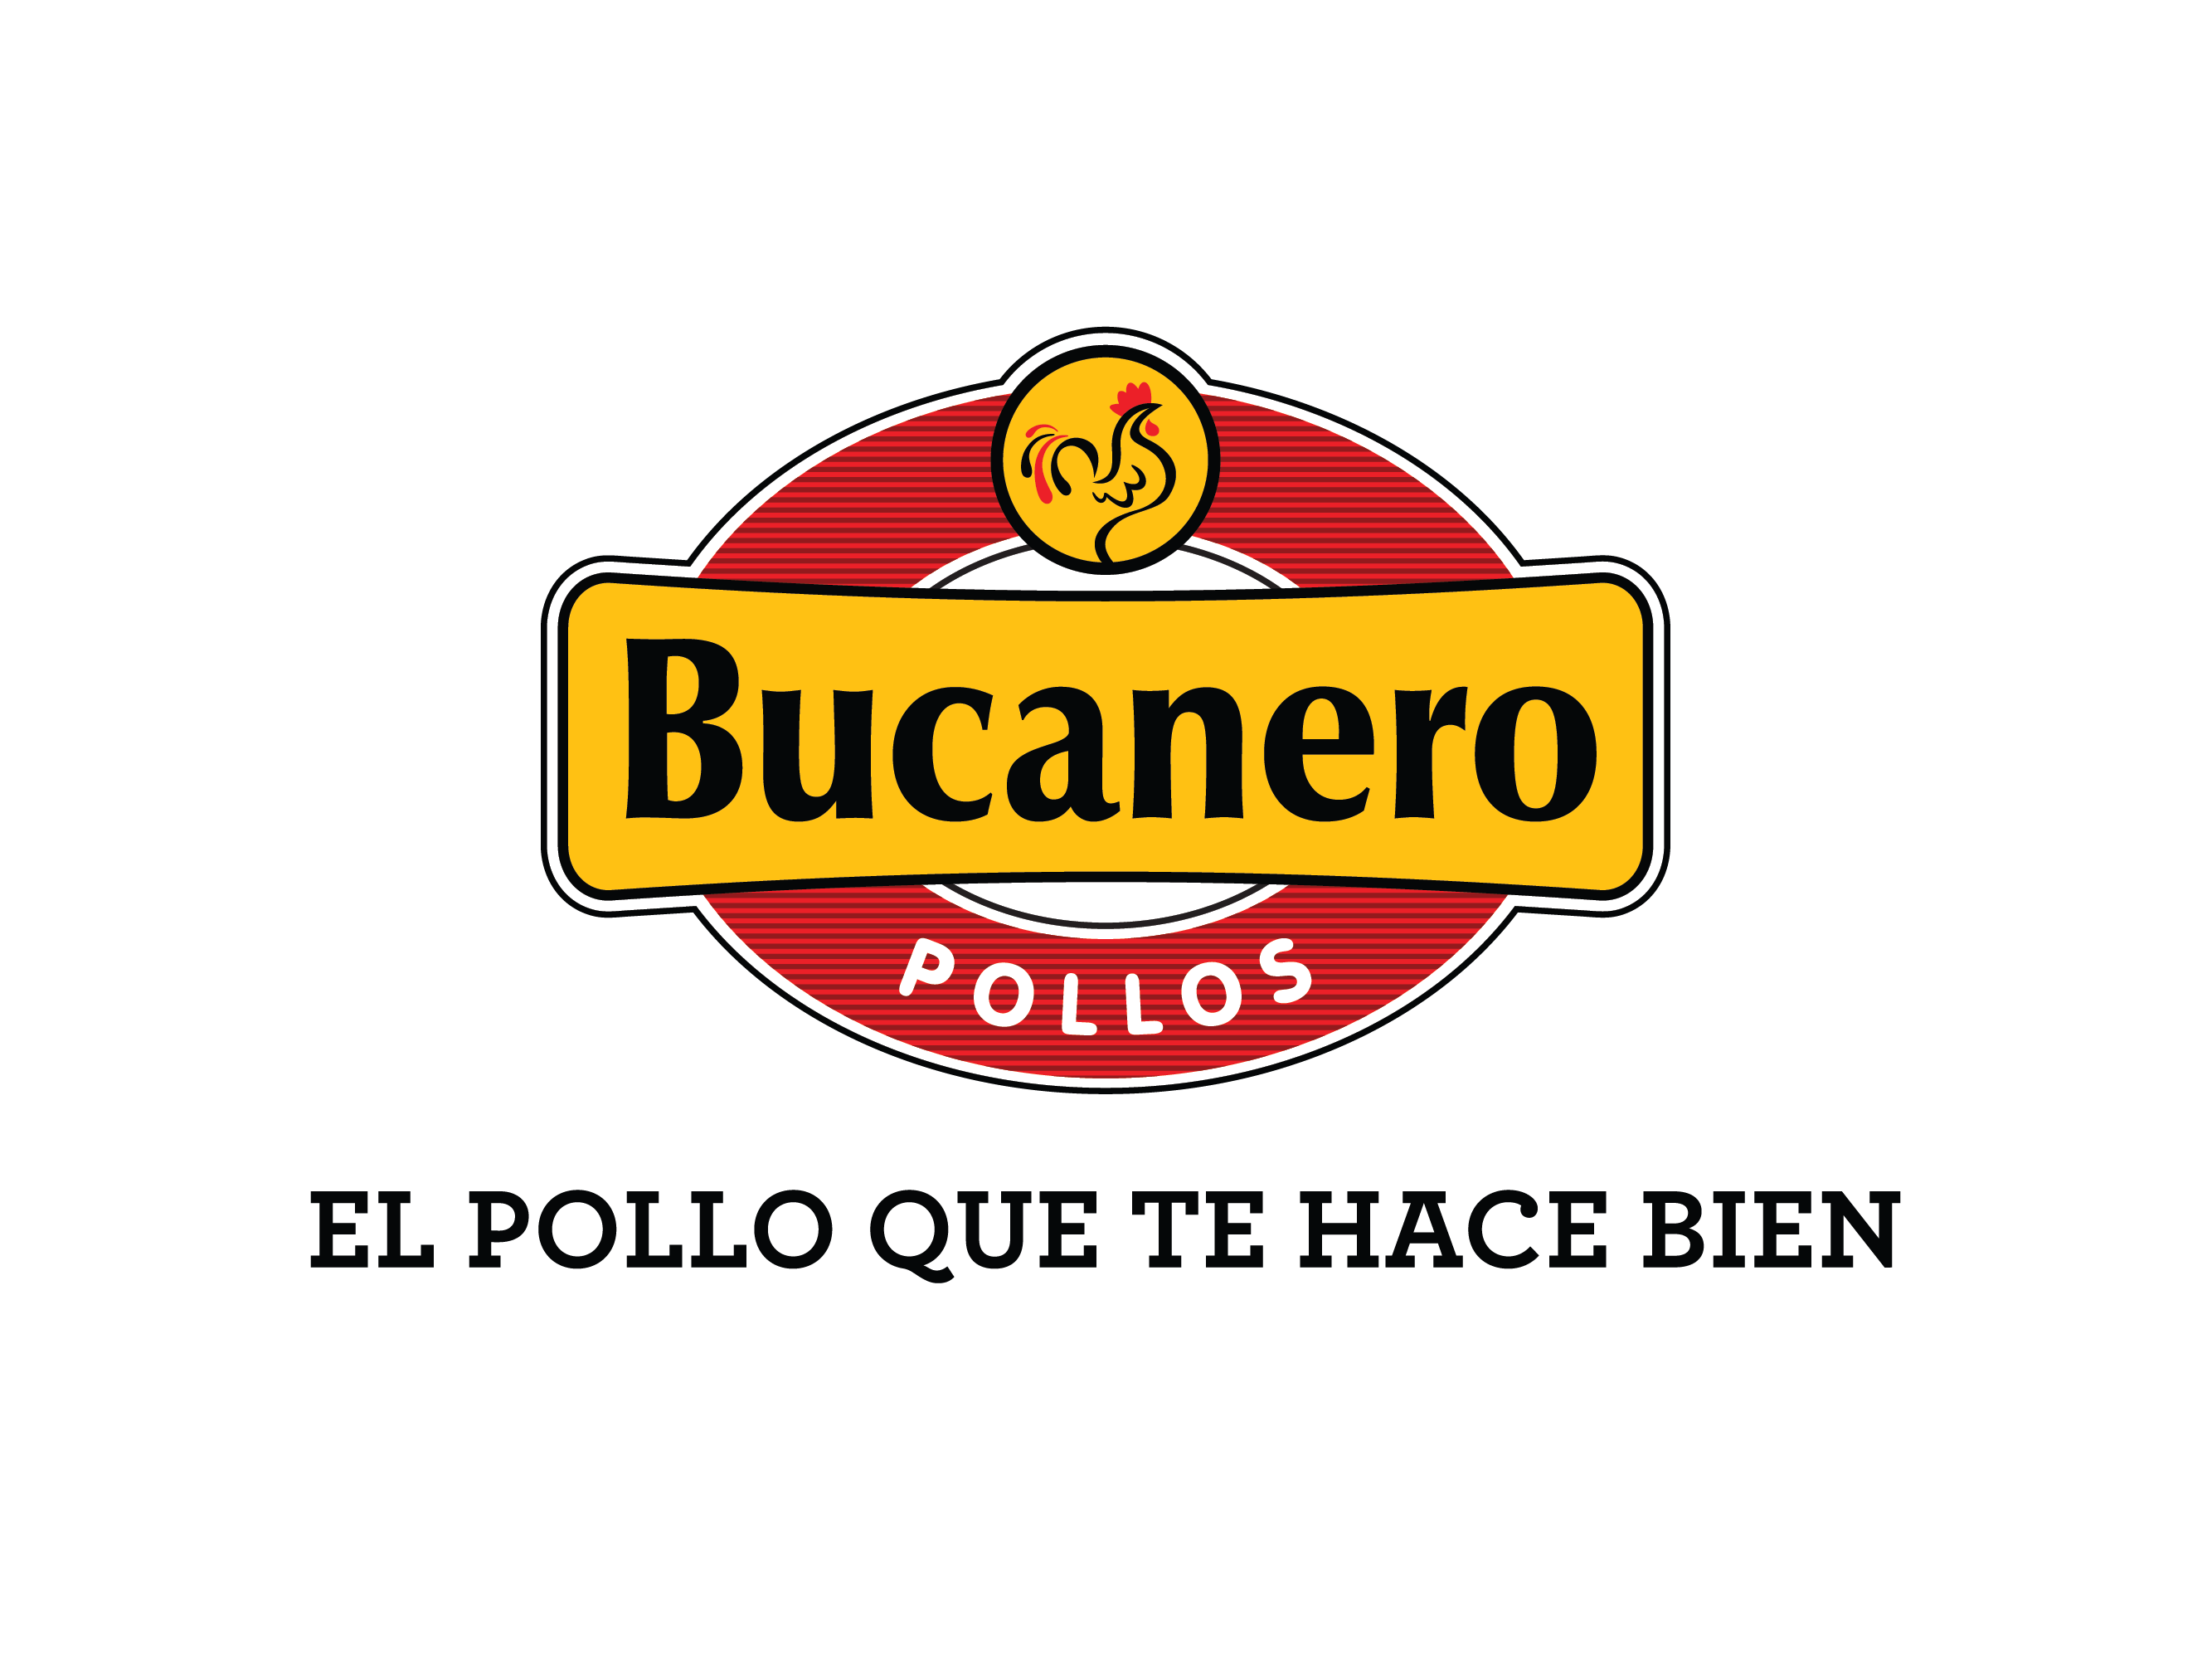 Bucanero company logo image